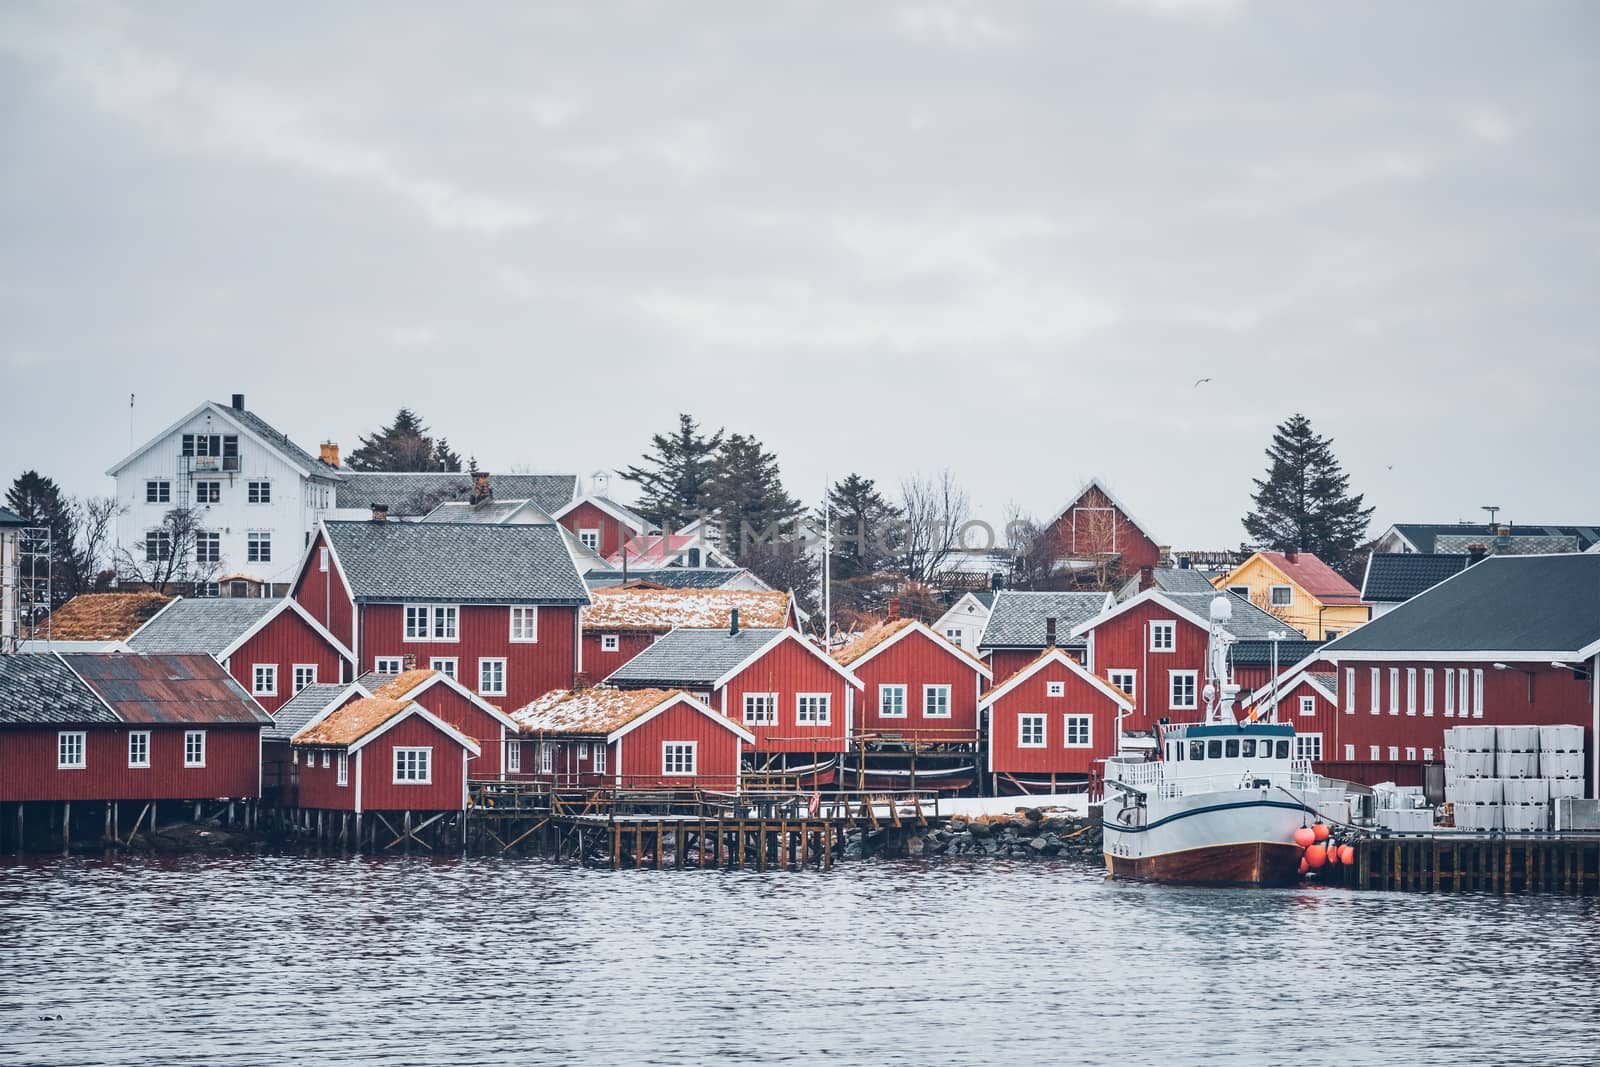 Reine fishing village, Norway by dimol